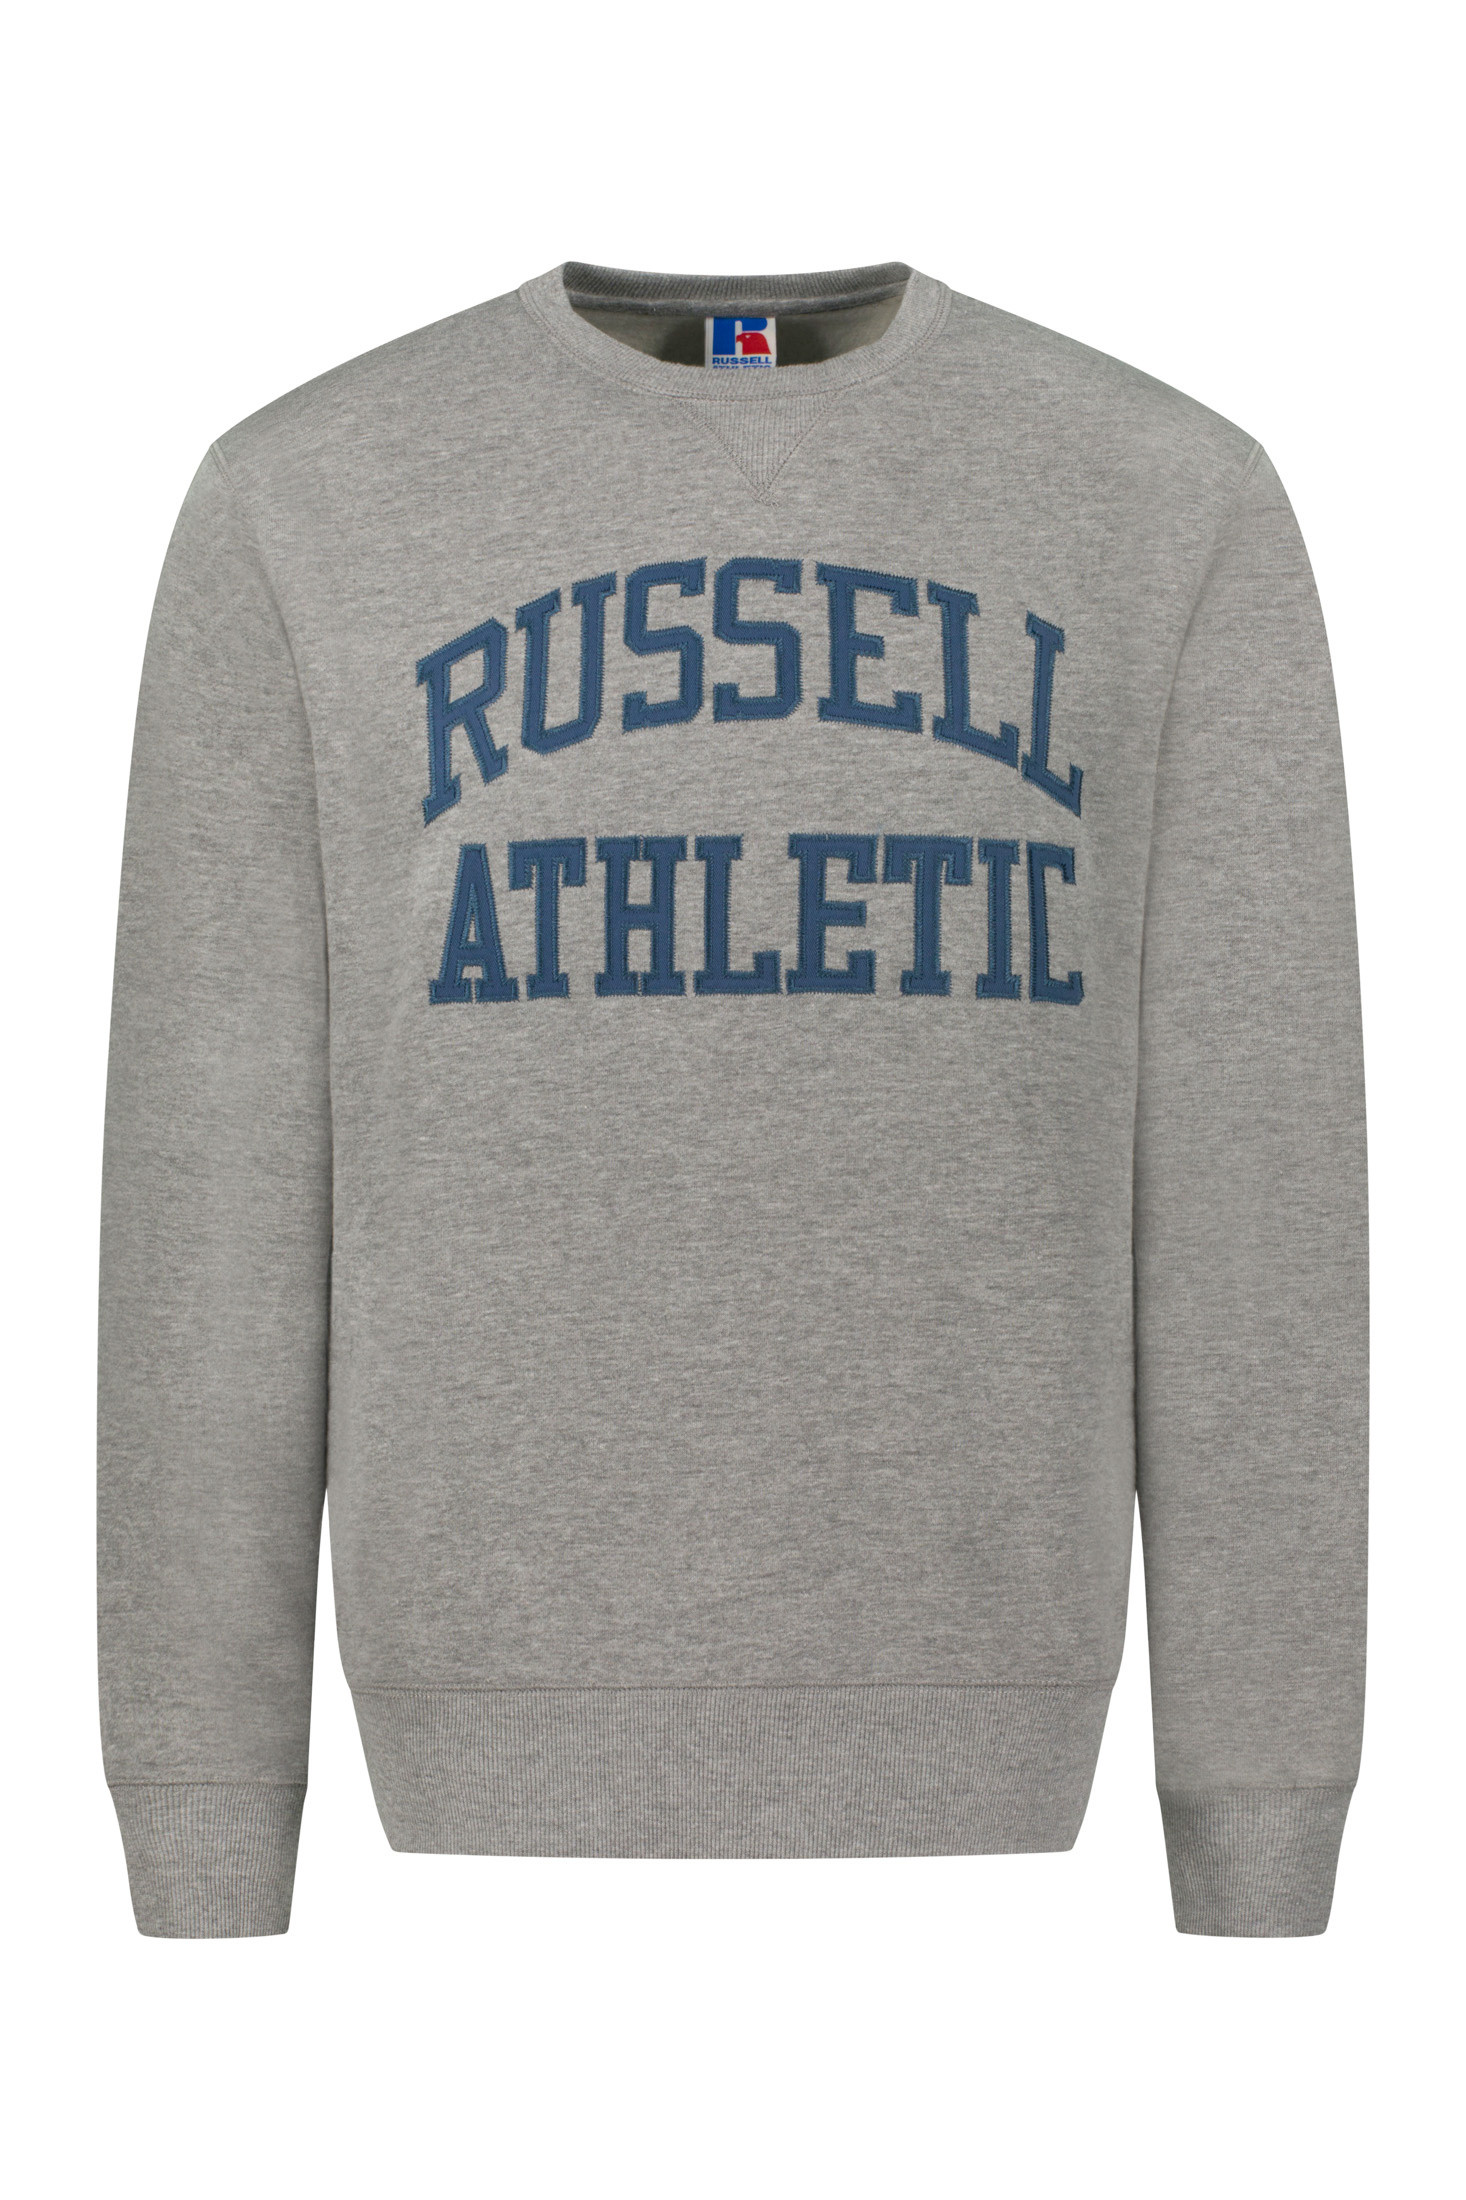 Russell Athletic - Felpa con ricamo, Grigio chiaro, large image number 0